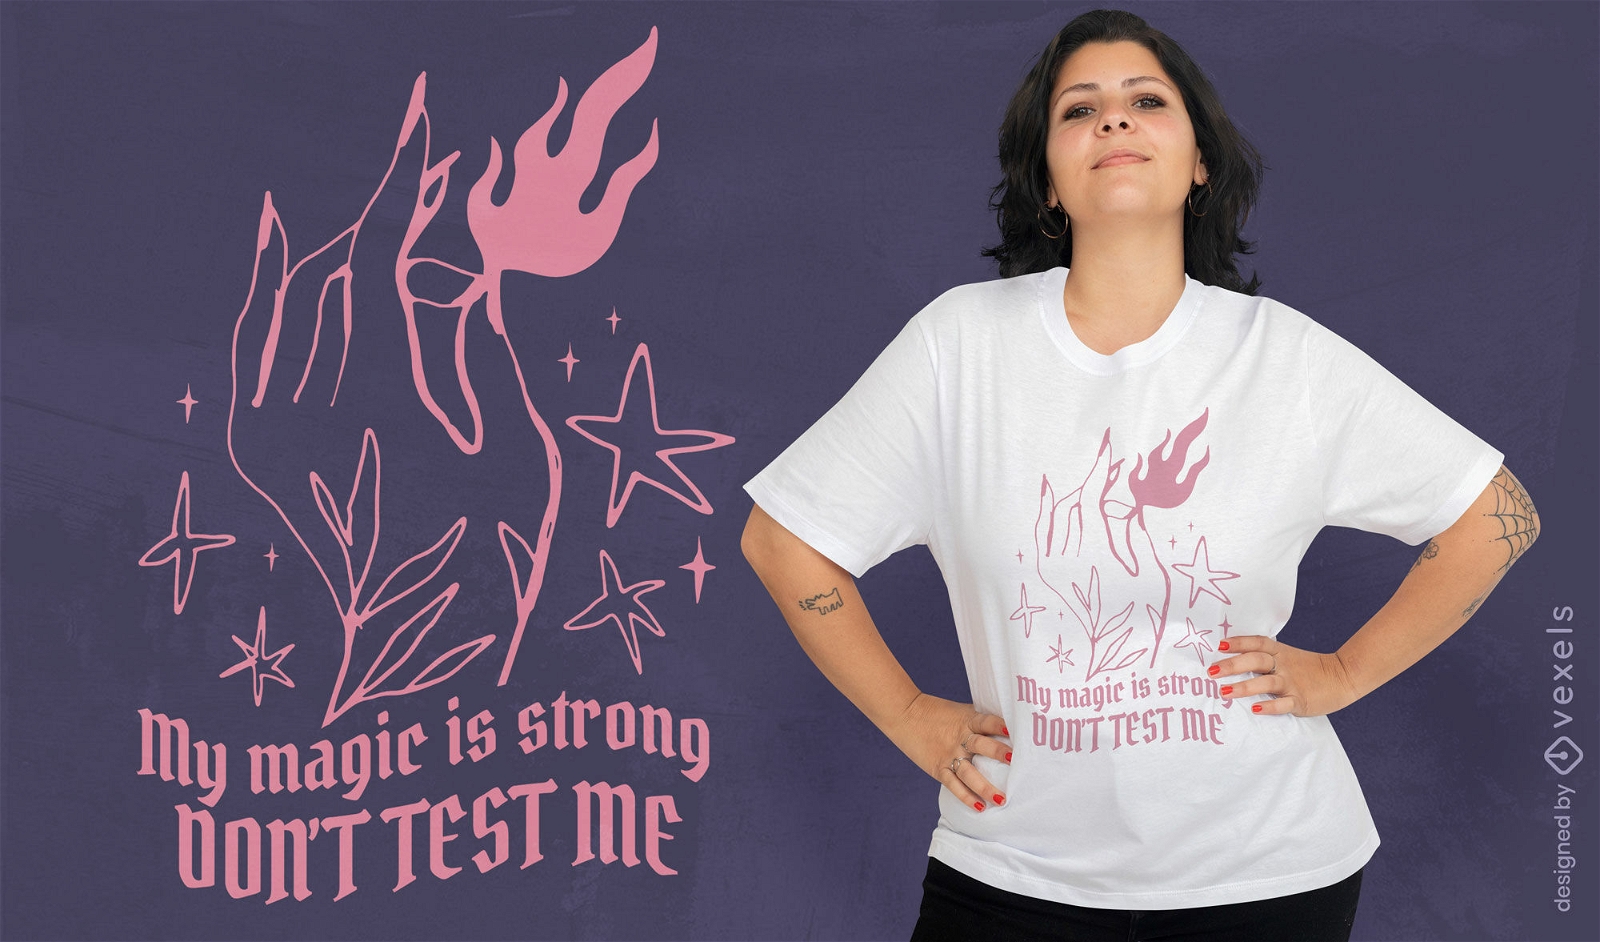 Witch magic t-shirt design